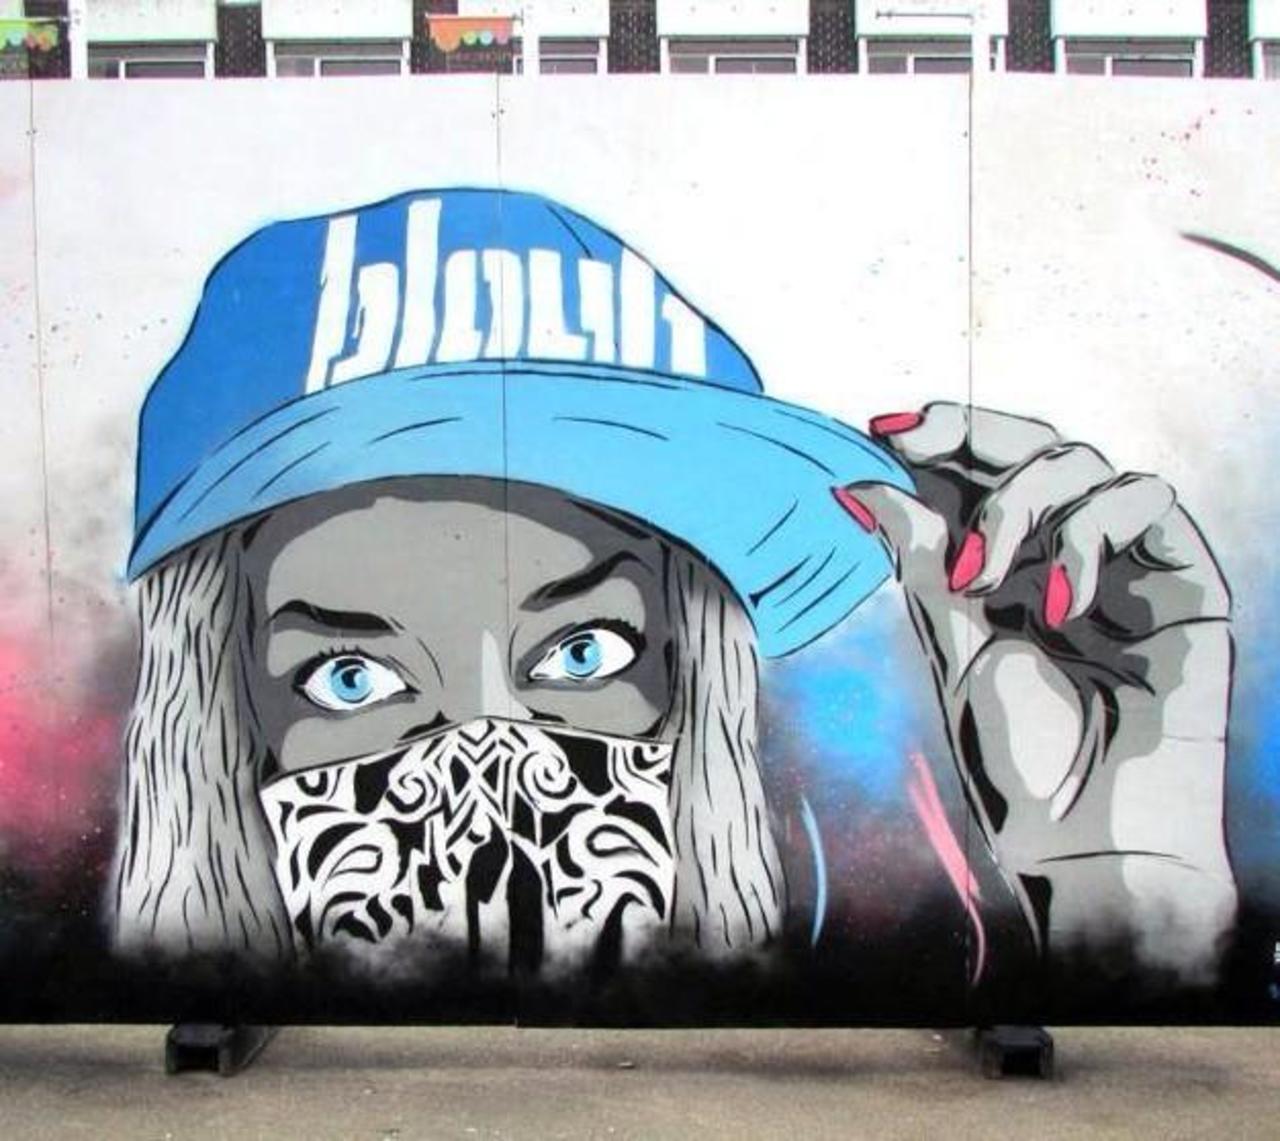 RT @designopinion: Artist Blouh at the Glouchester Paint Jamb, London, UK #art #mural #graffiti #streetart http://t.co/WJErqoaAIm